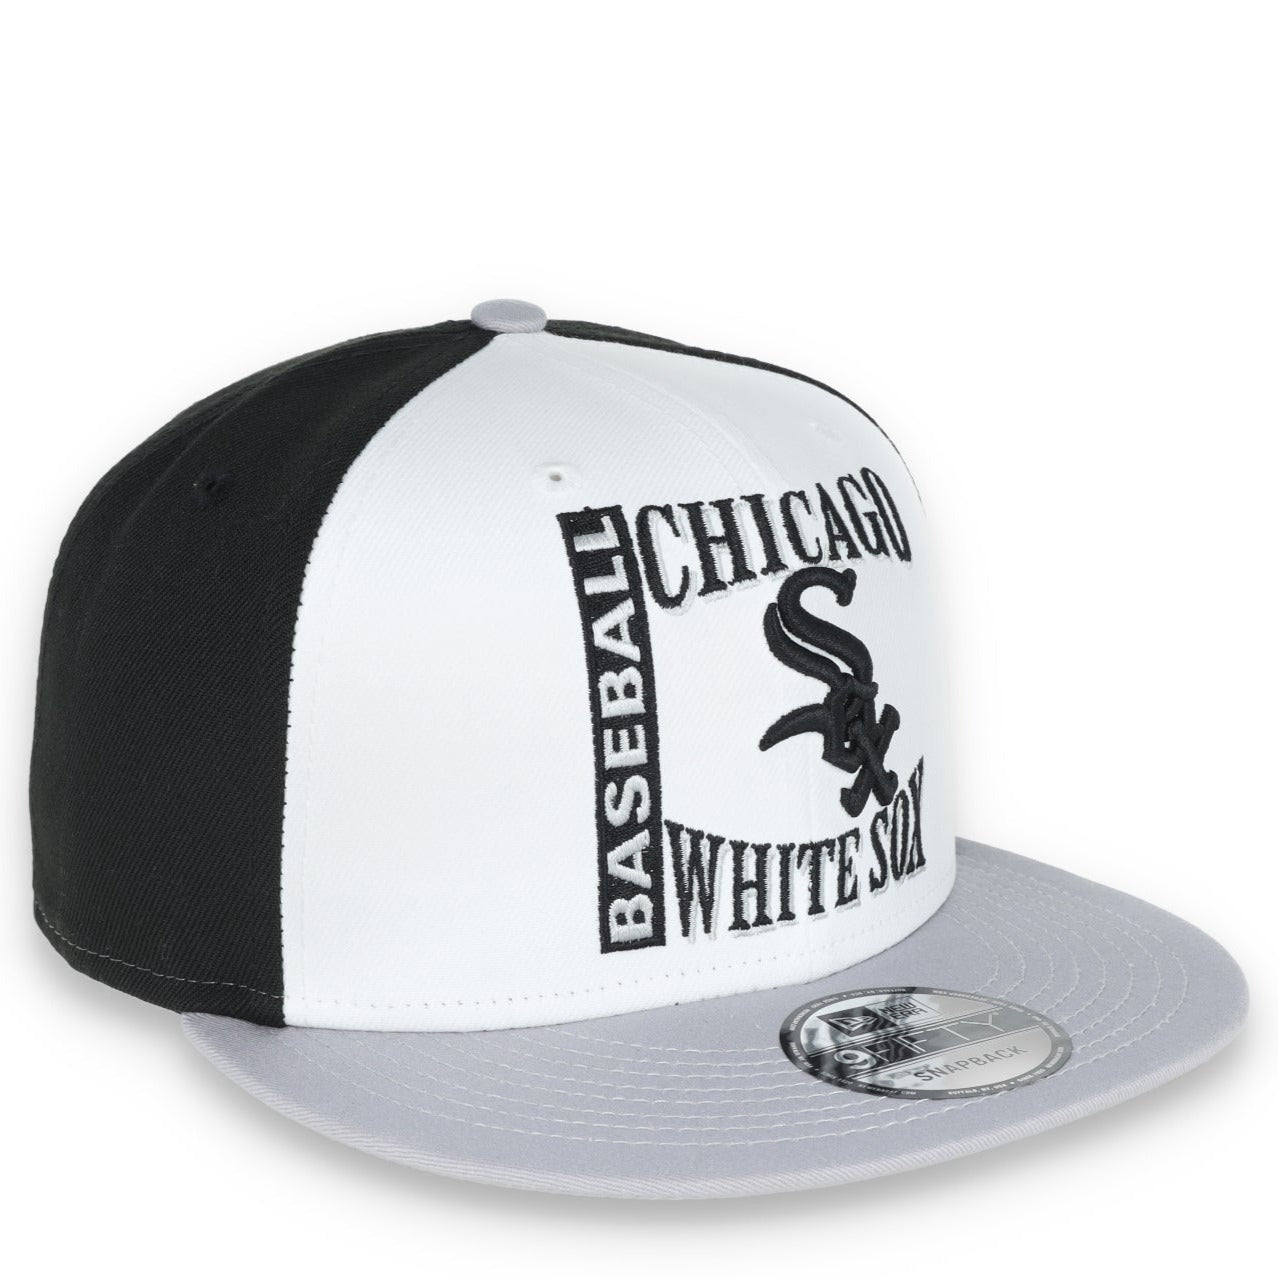 New Era Chicago White Sox Retro Sport 9FIFTY Snapback Hat - White/Black